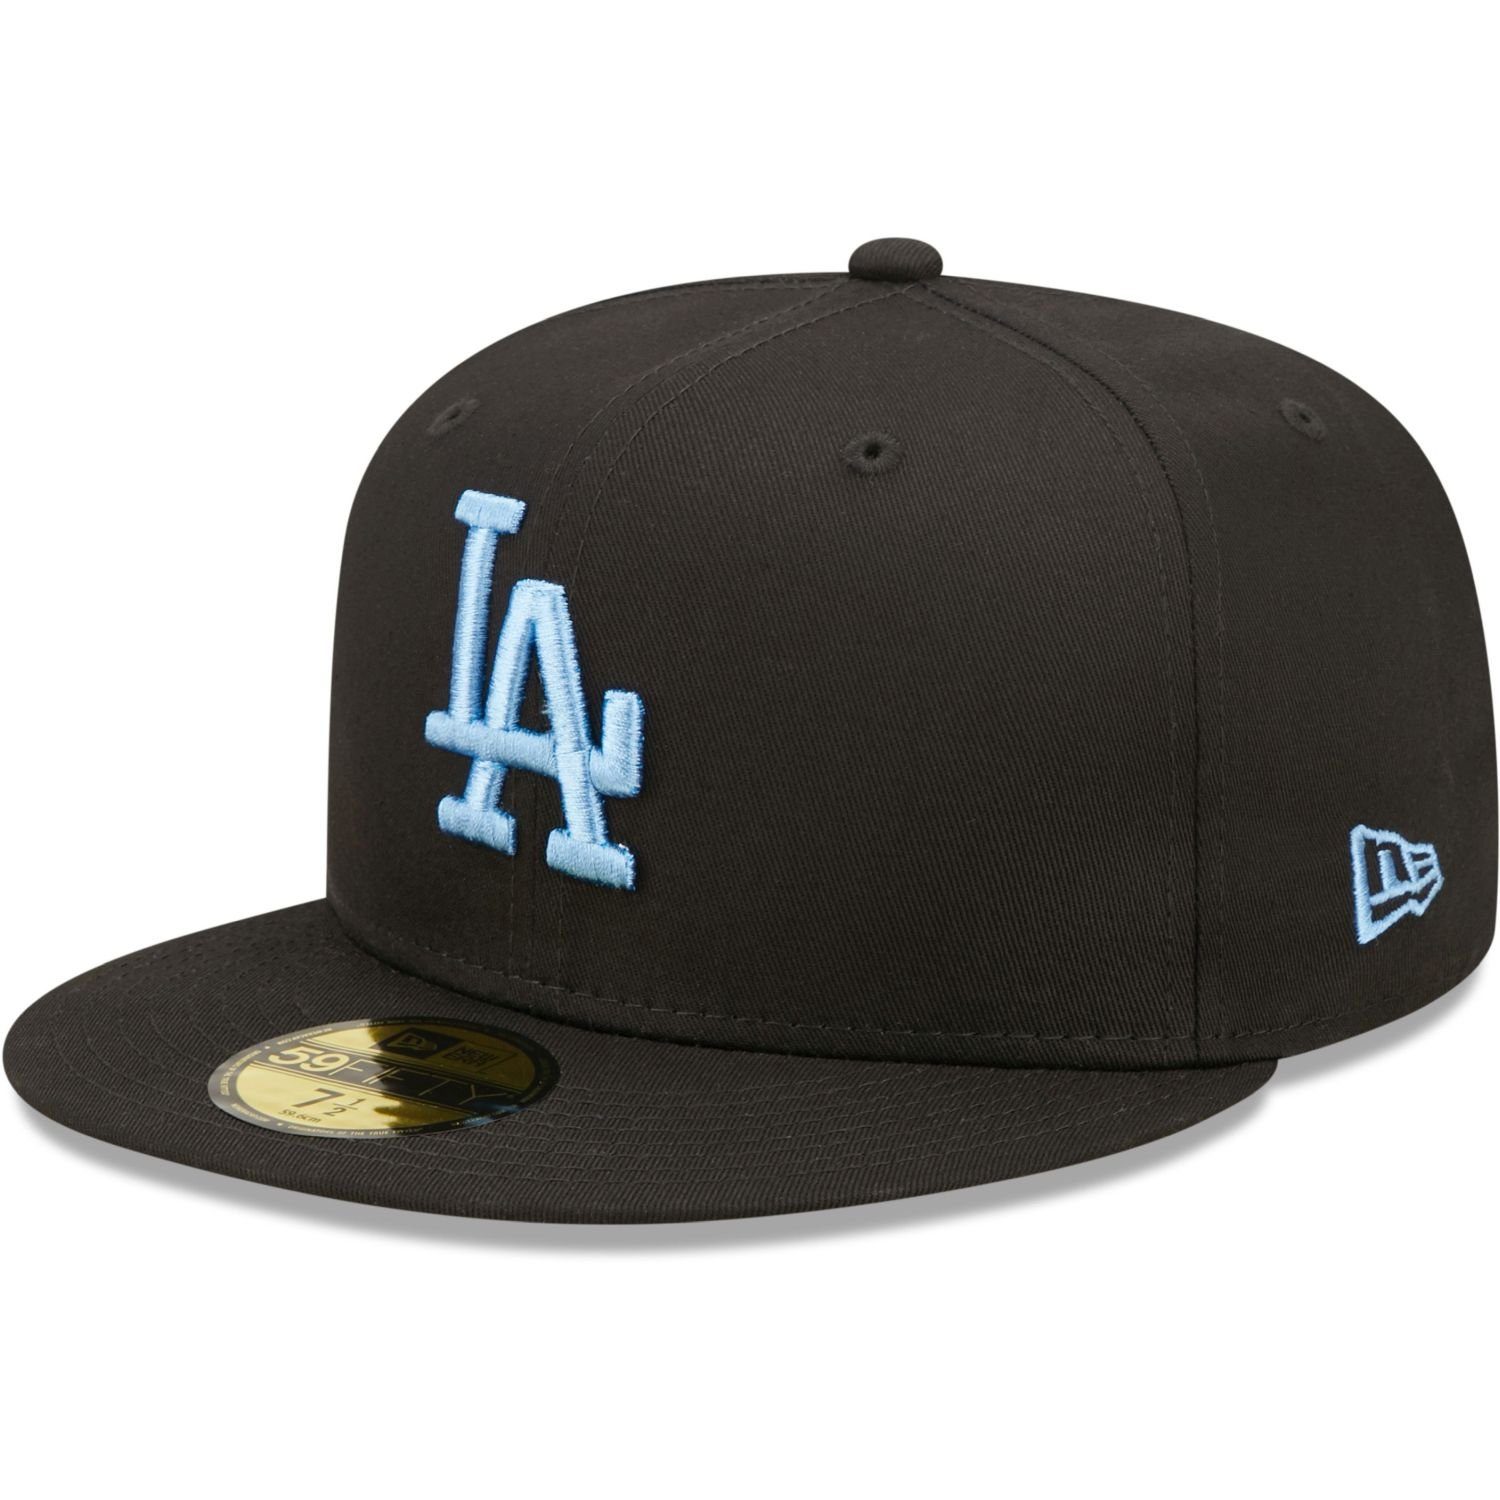 New Era Fitted Cap 59Fifty Los Angeles Dodgers schwarz-blau